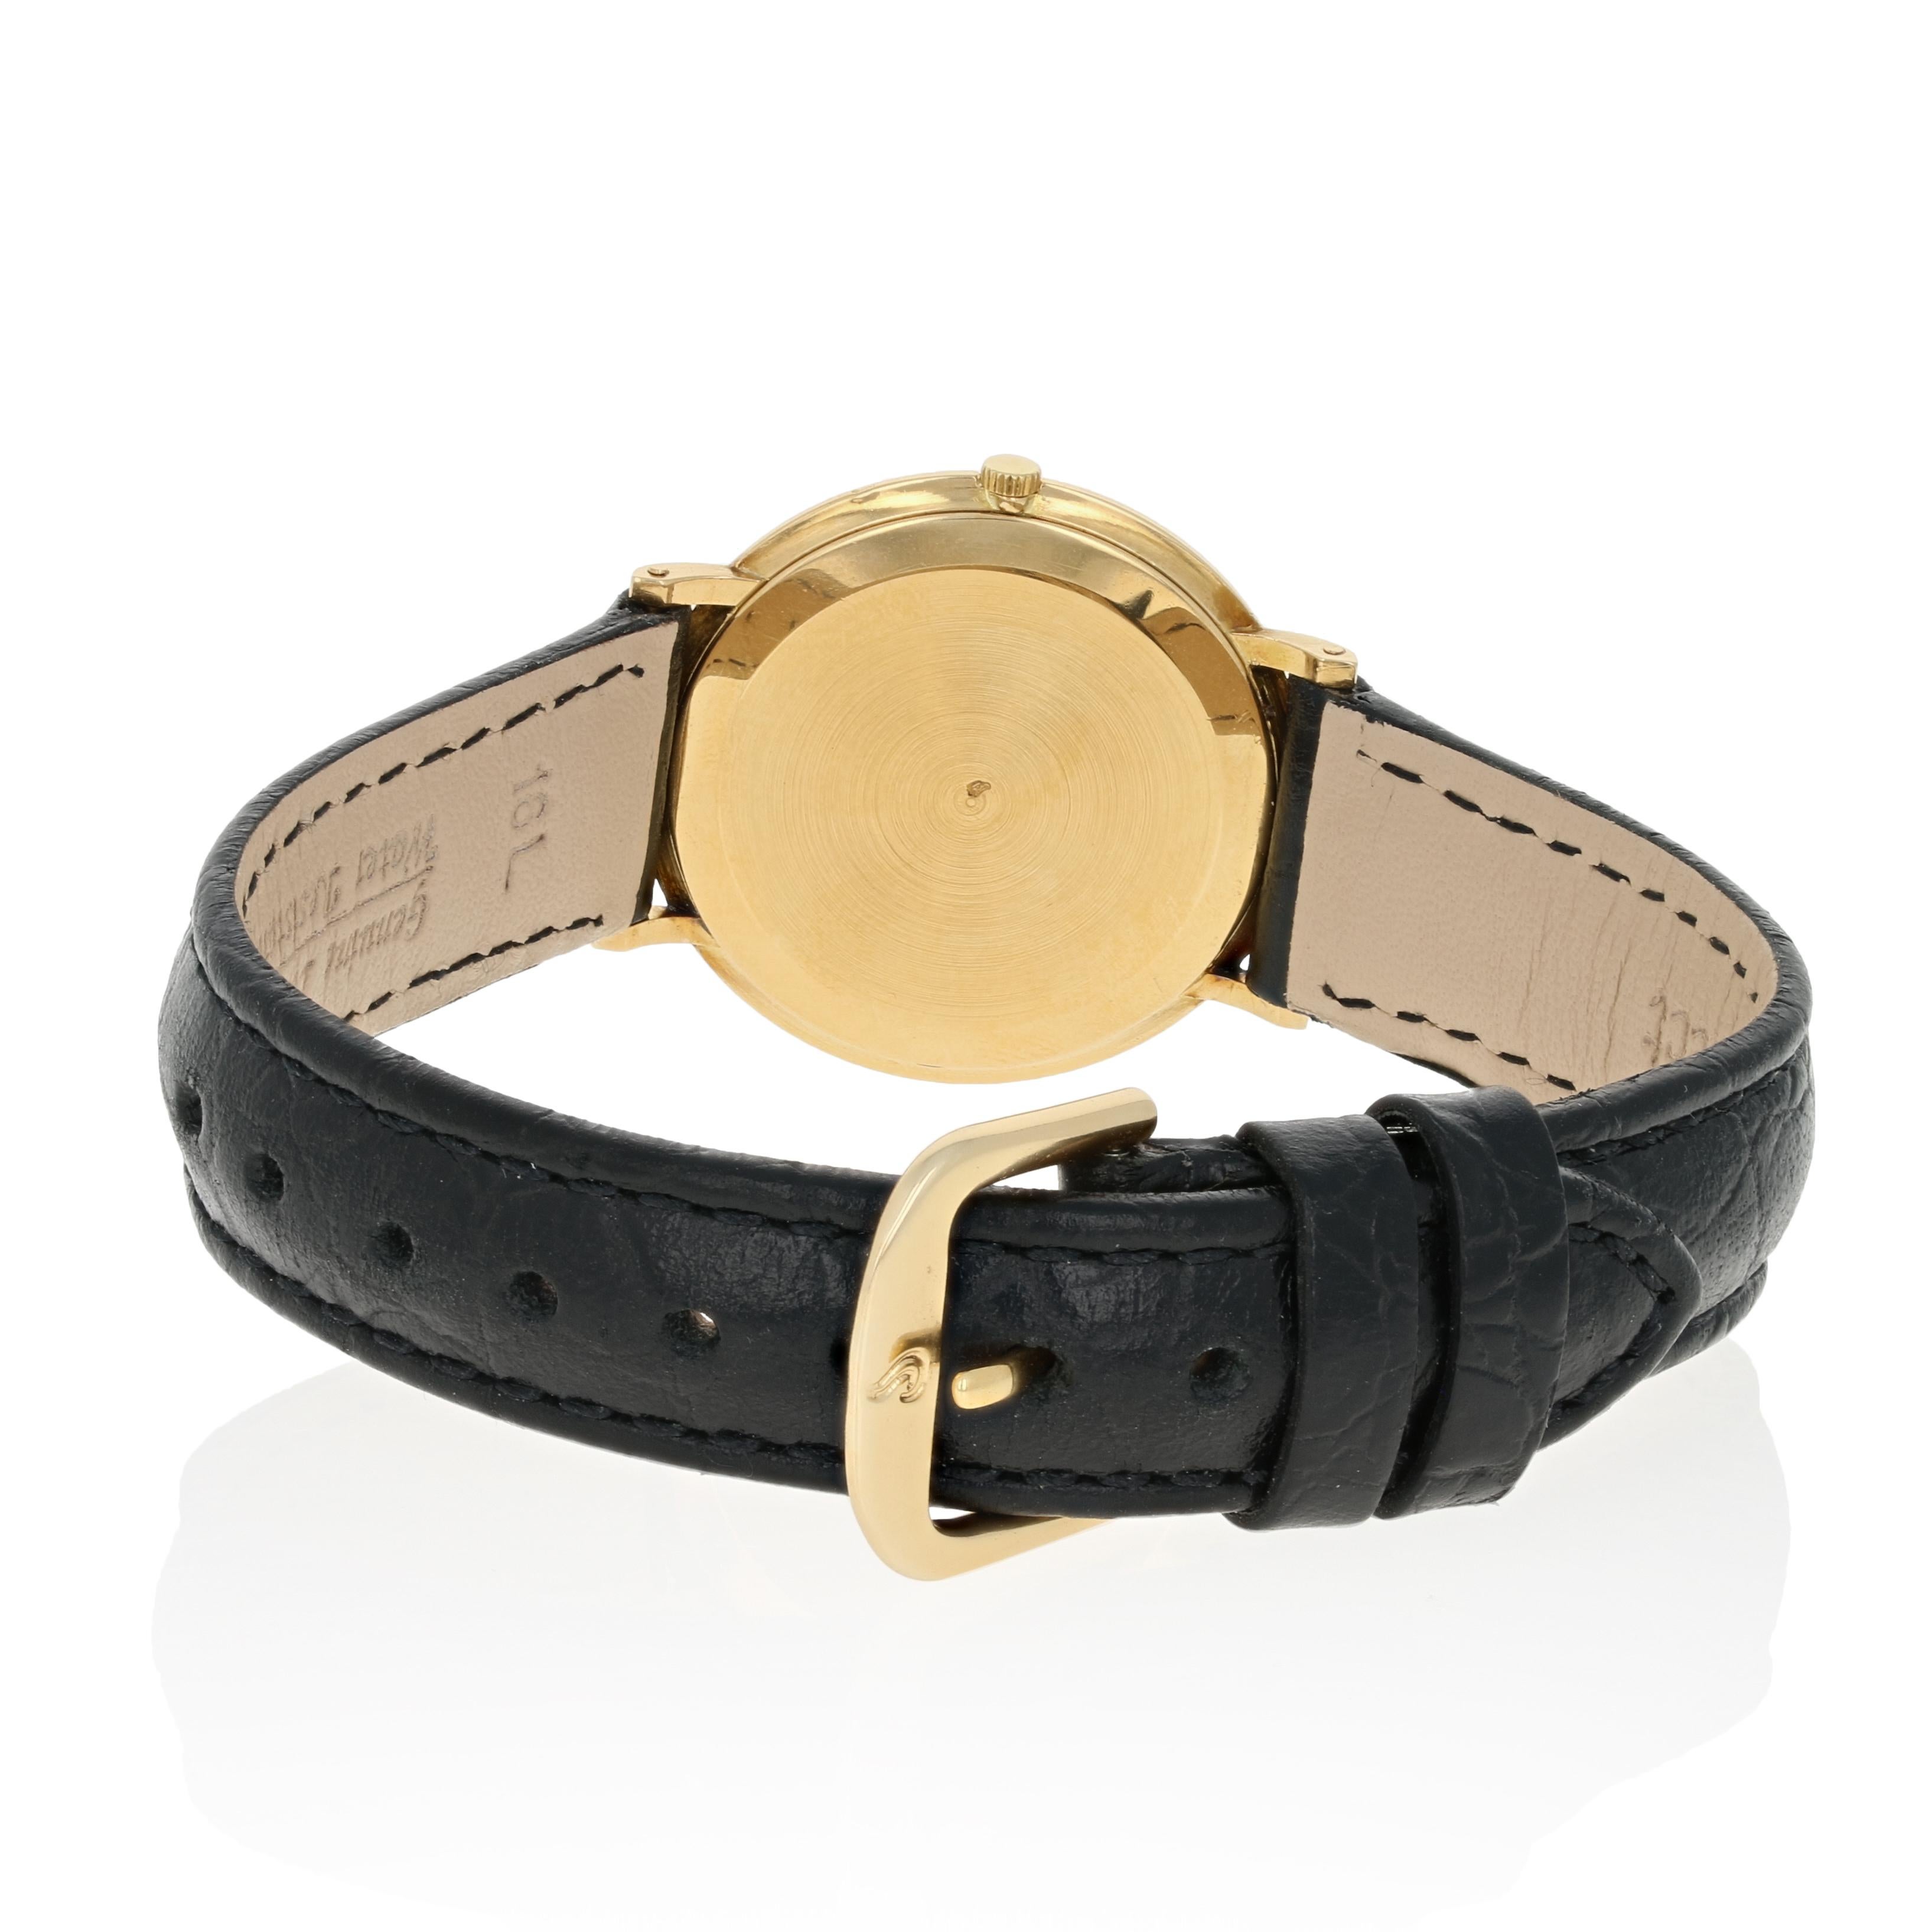 Piaget Men's Vintage Watch 18K Gold Leather Band Mechanical Movement 2Yr Wnty 3